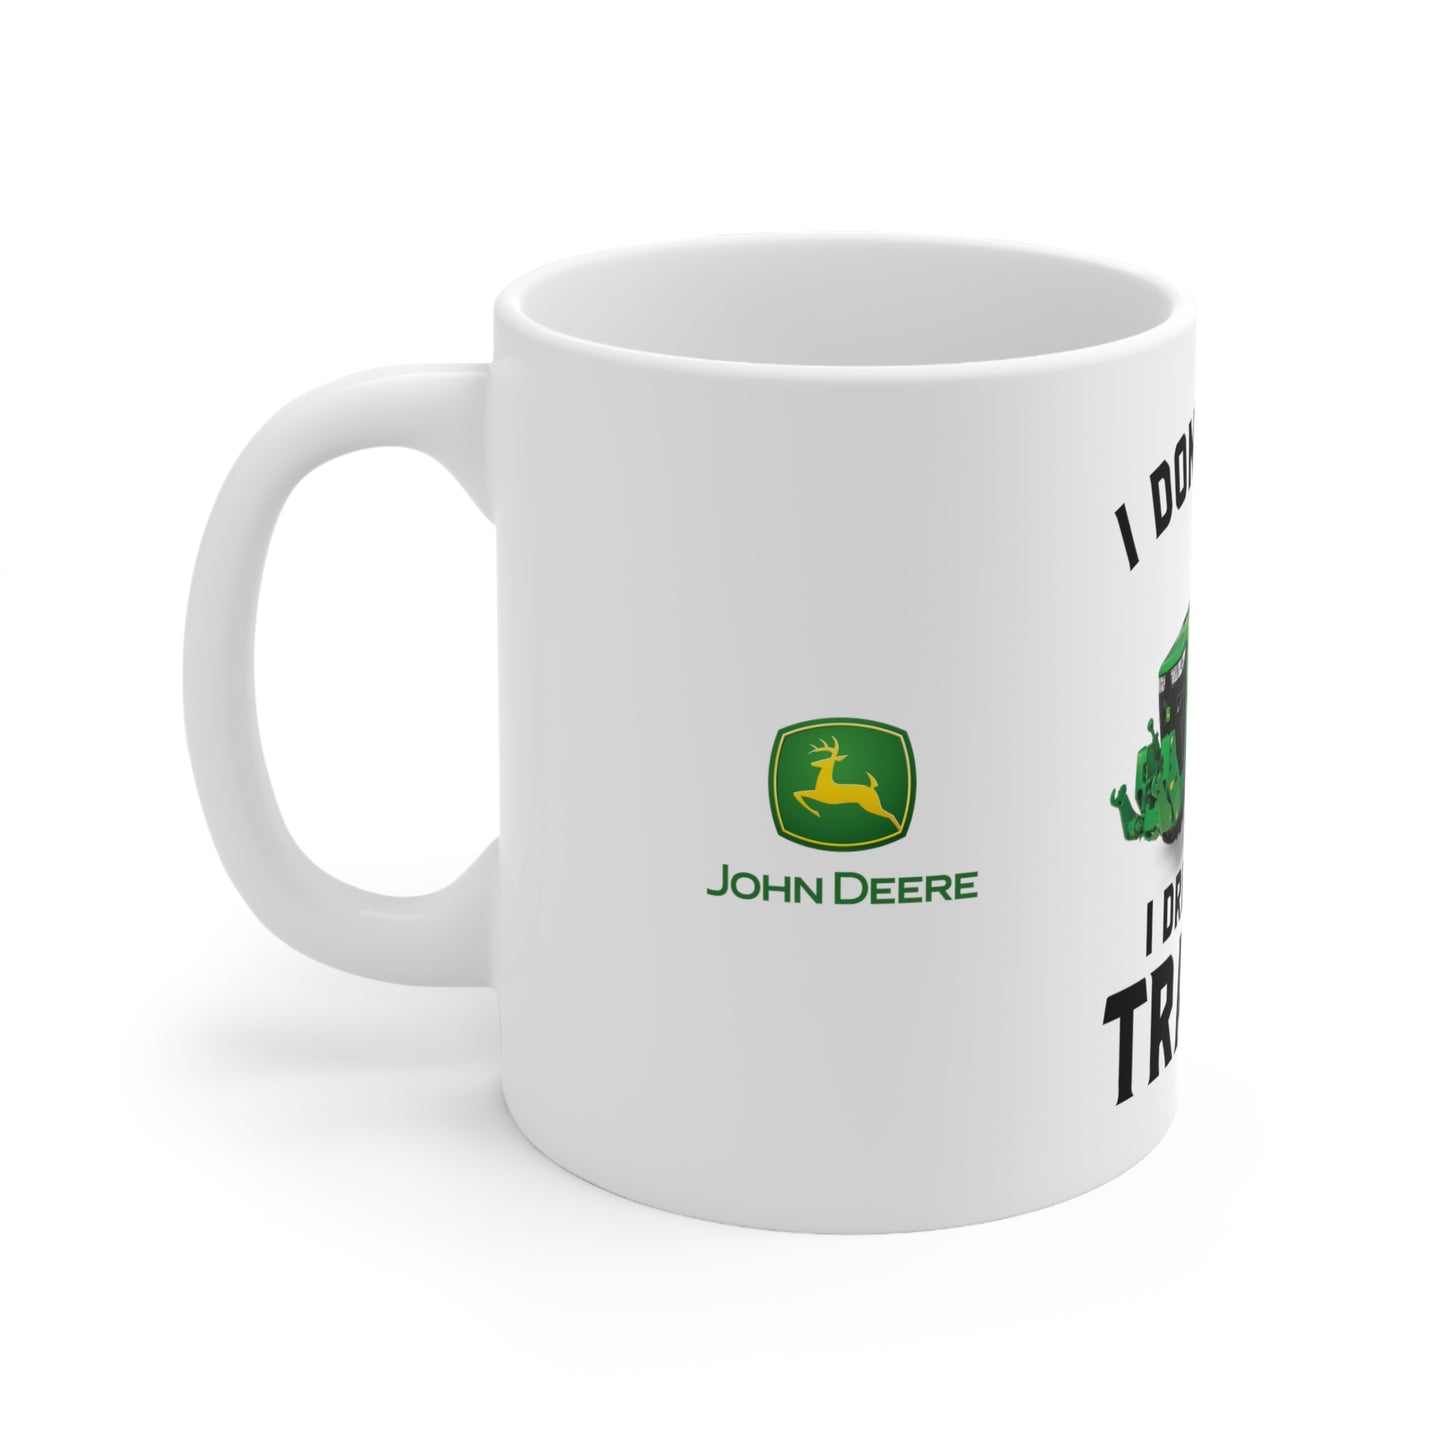 I Don't Snore I Dream I'm a John Deere Tractor Ceramic Coffee Mug 11oz, Gift for Dad